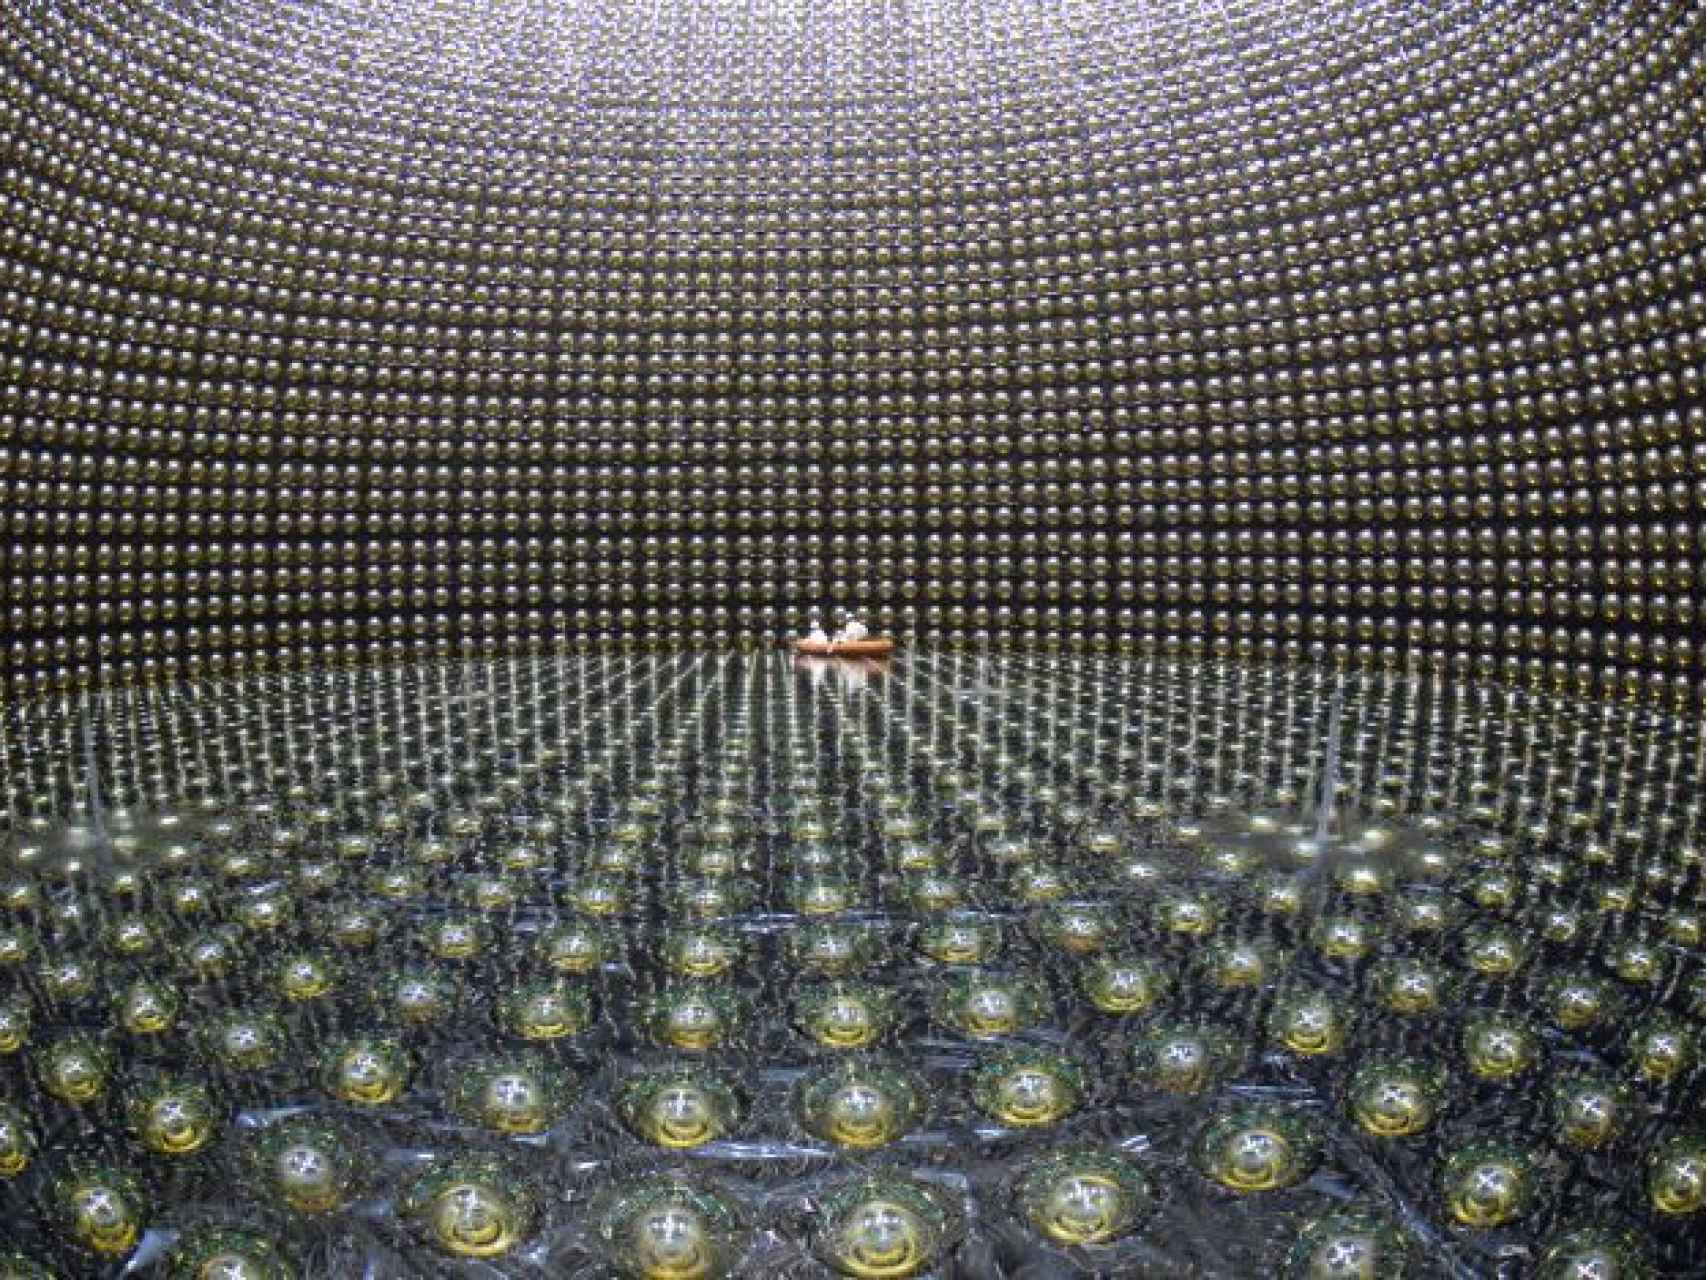 Observatorio de neutrinos Superkamiokande.